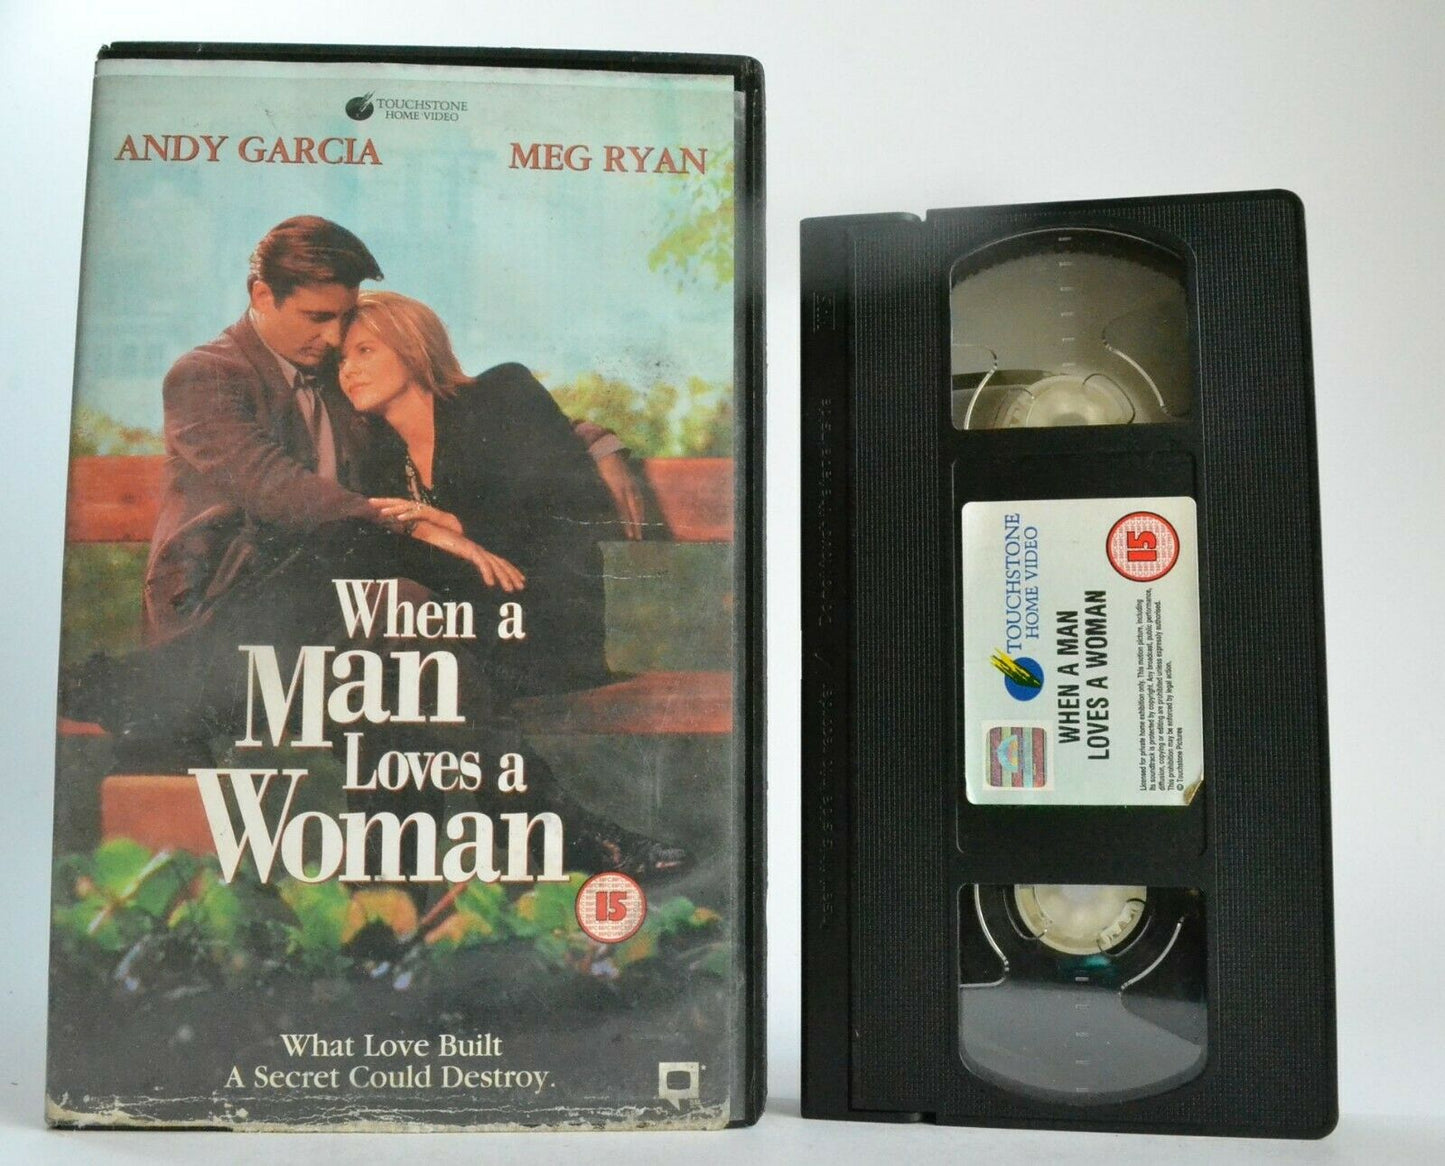 When A Man Loves A Woman (1994): Romantic Drama - Andy García/Meg Ryan - Pal VHS-